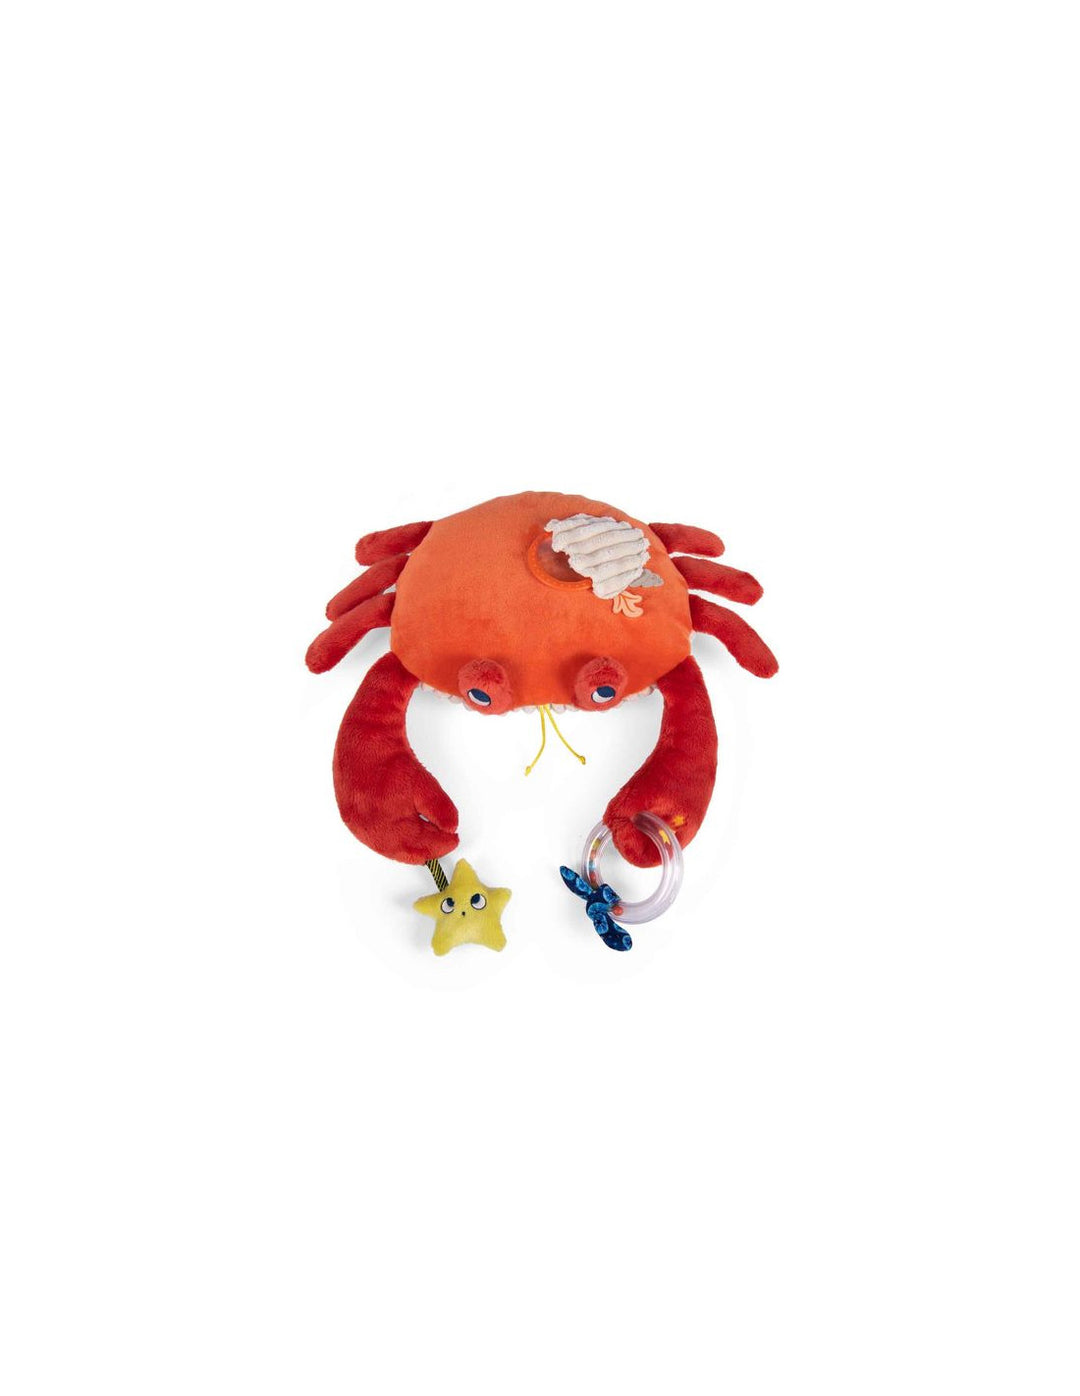 Large Activity Crab  - لعب الاطفال الطرية